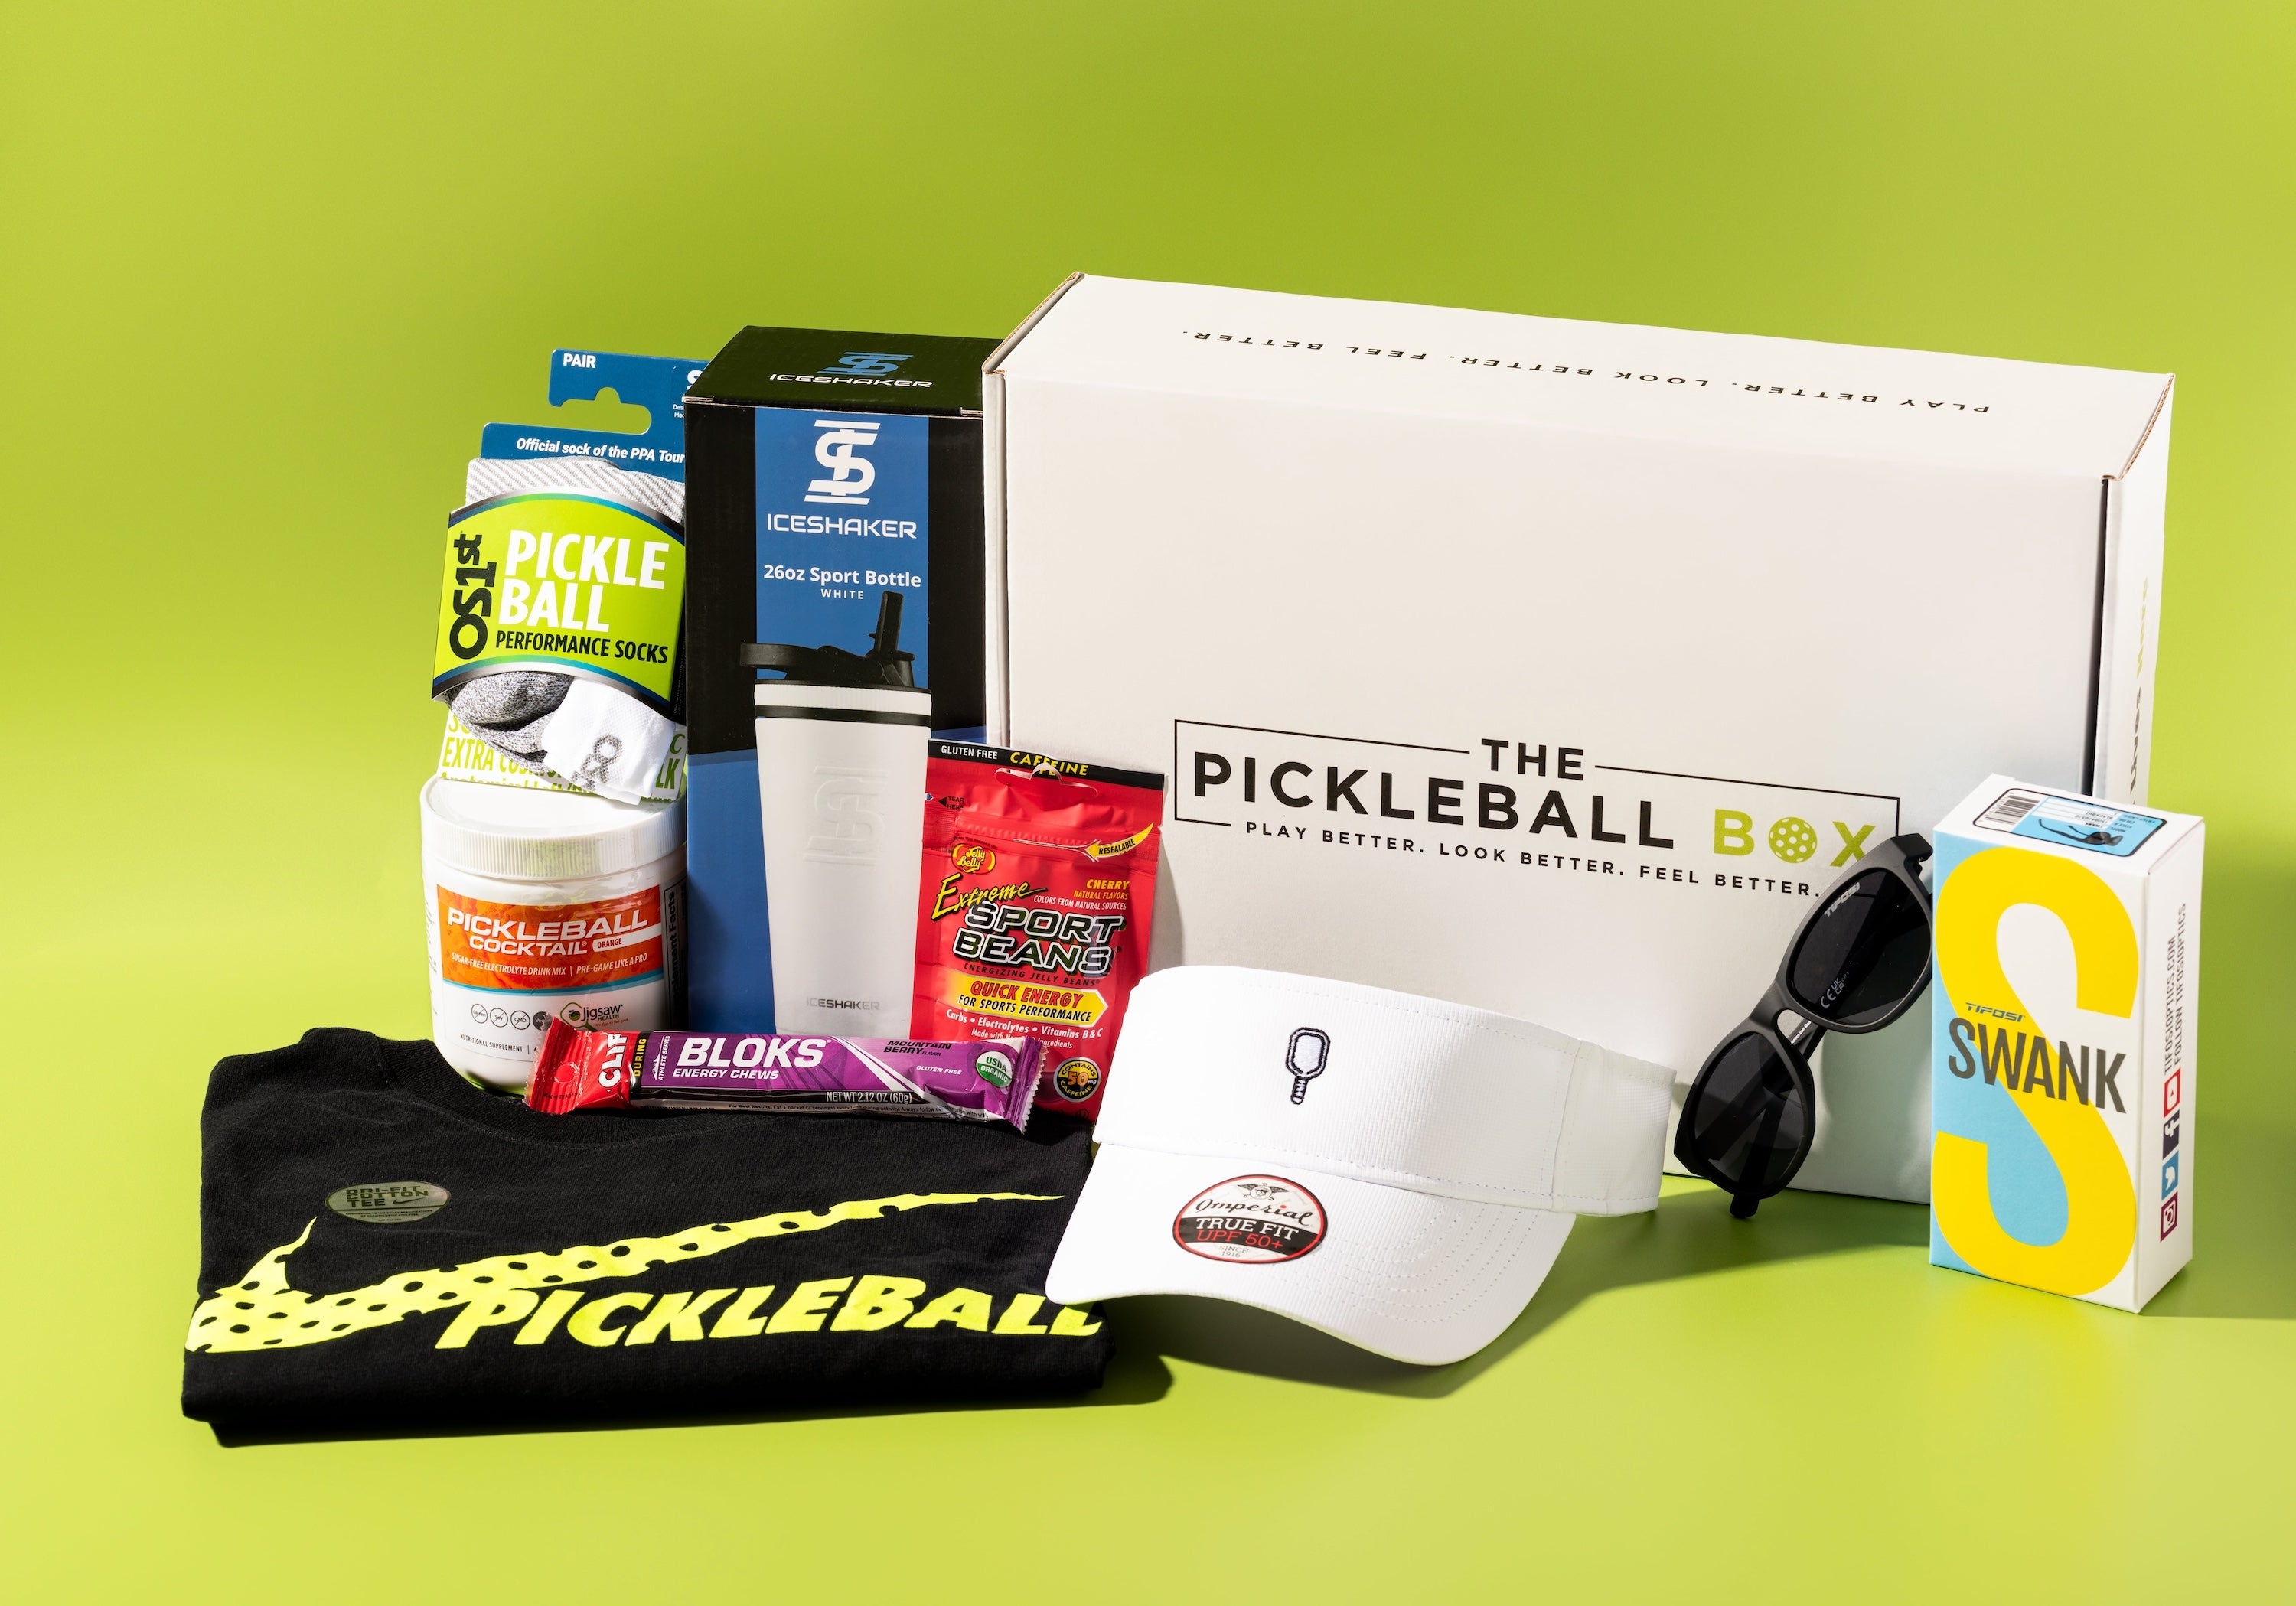 The Pickleball Box